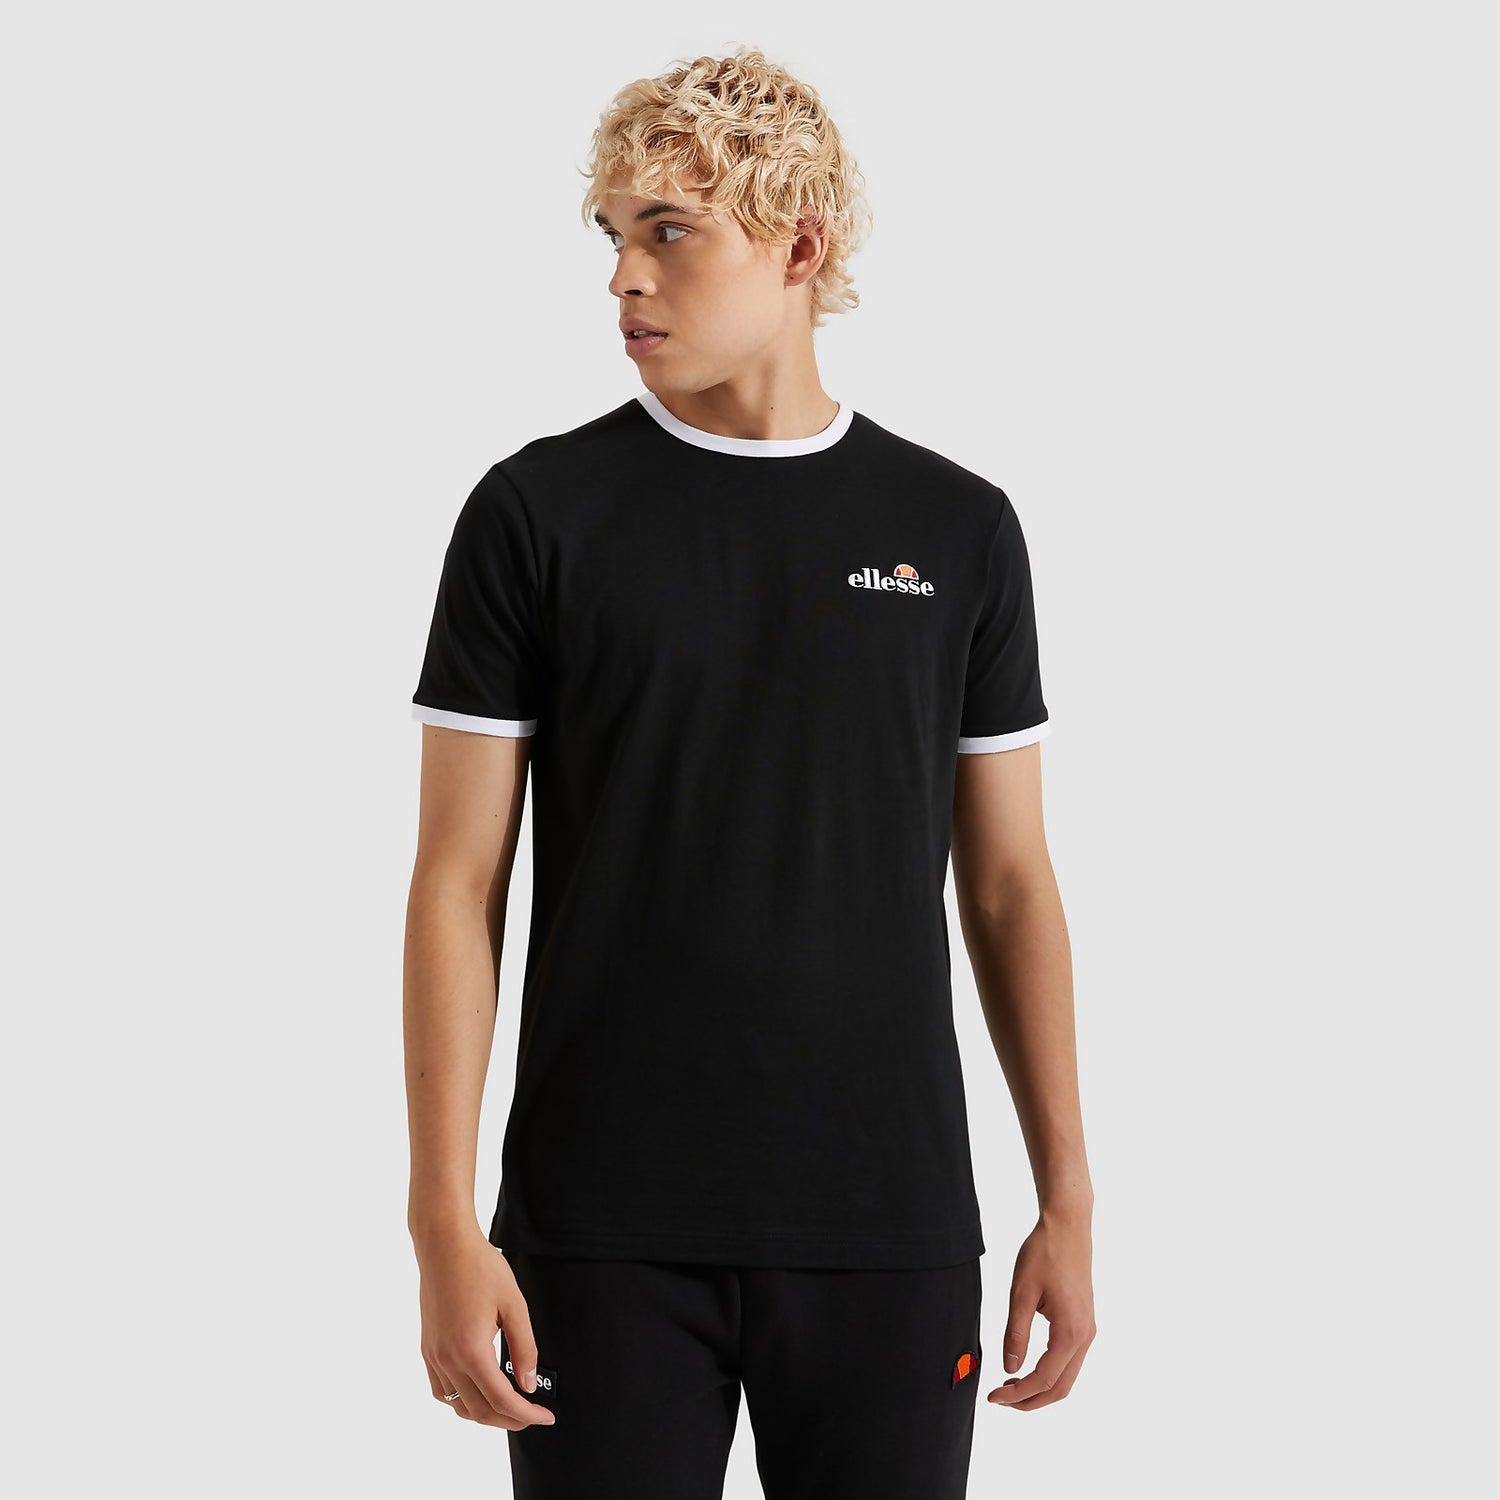 materiaal onwettig dealer Meduno T-Shirt Black | Ellesse